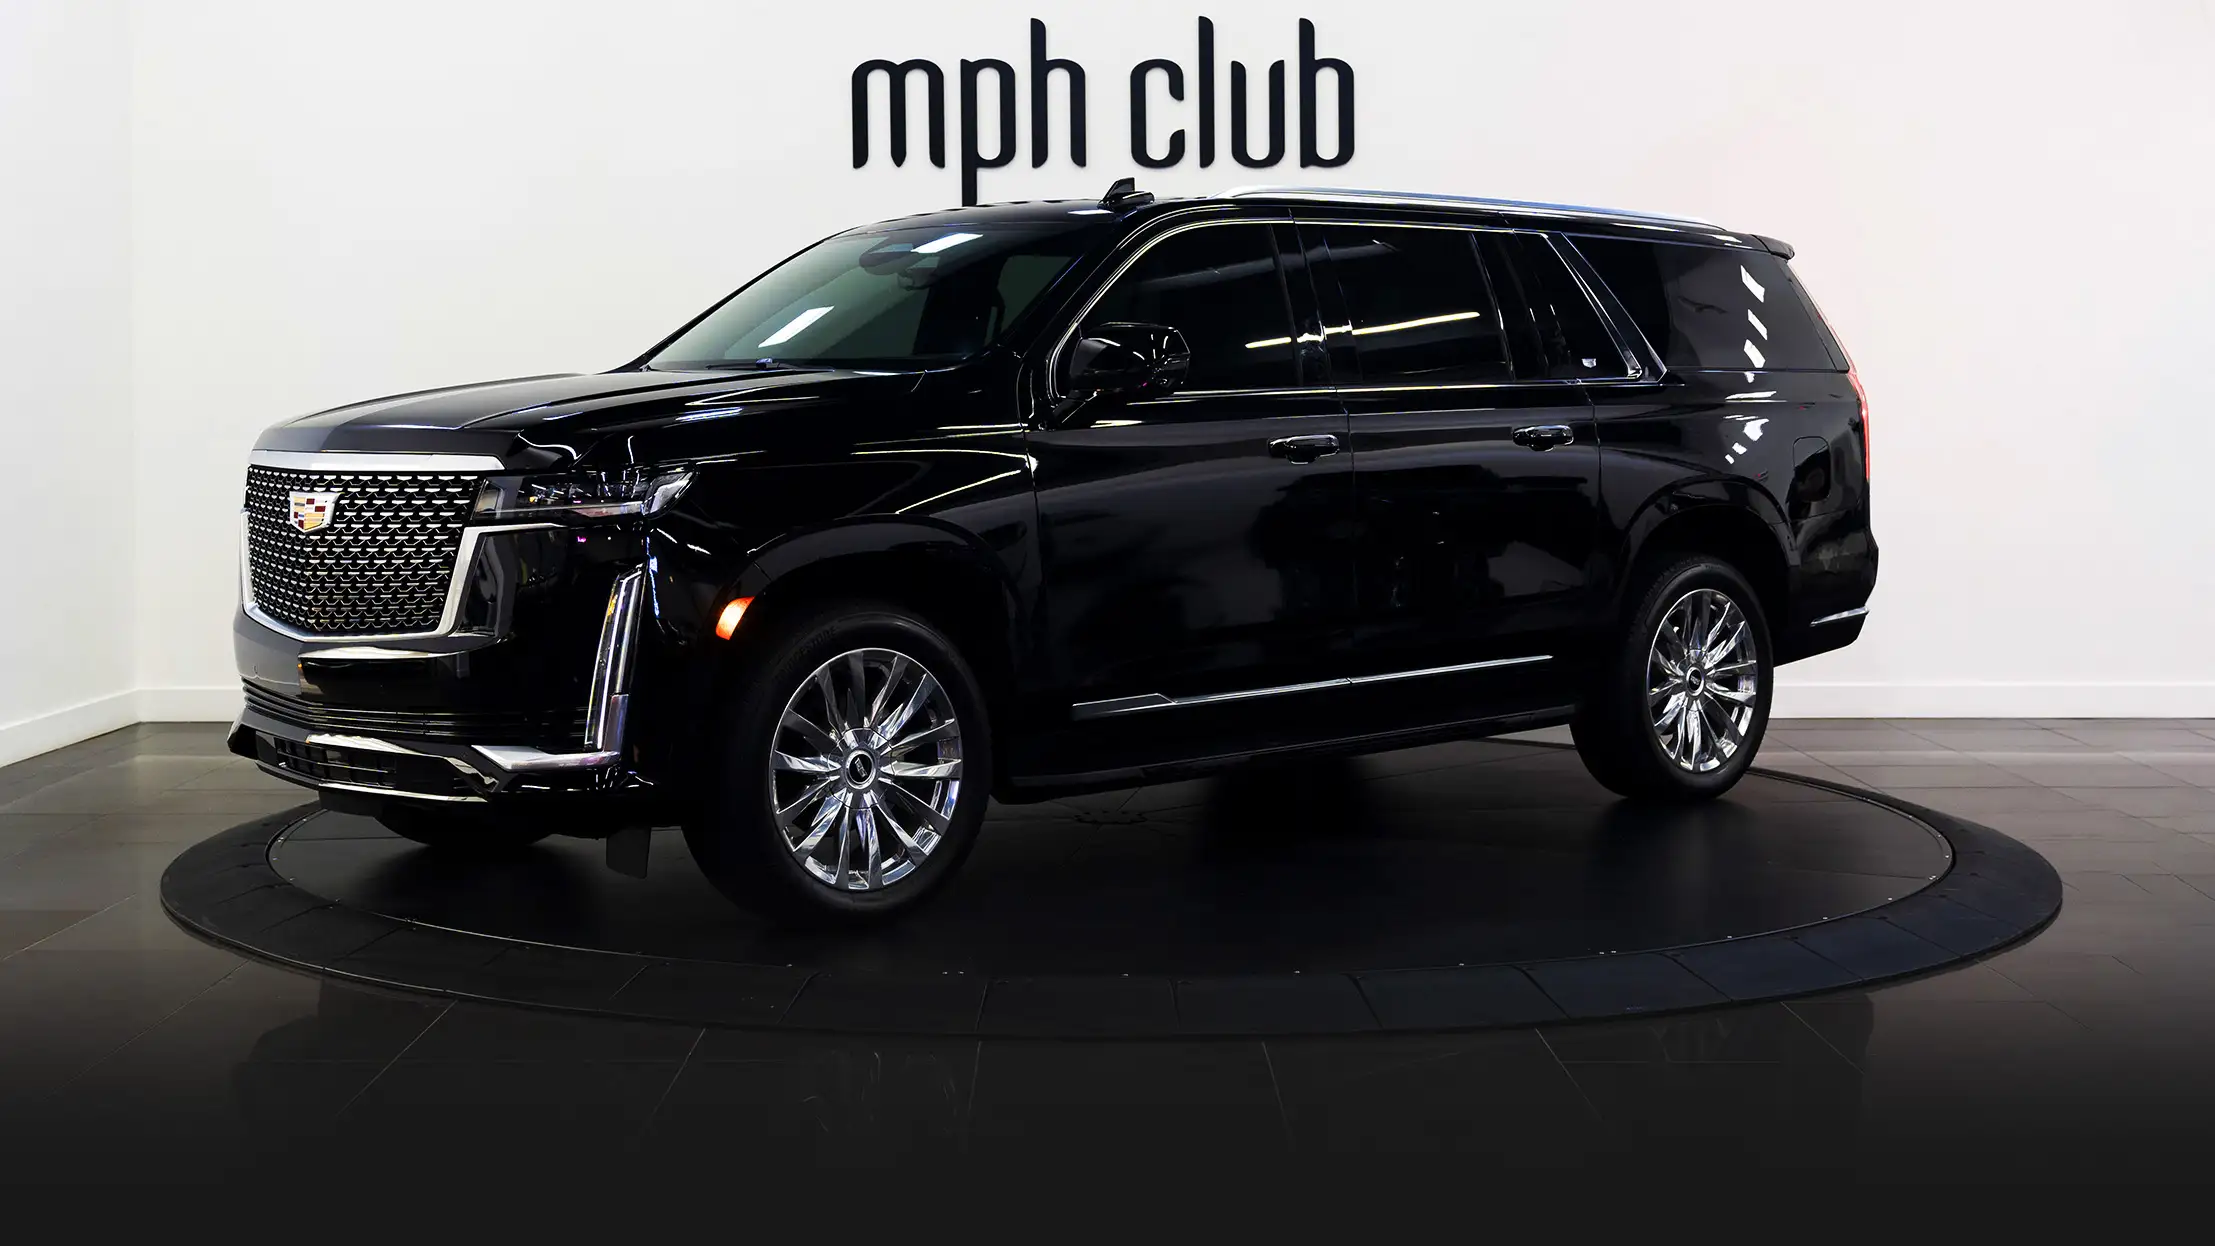 Cadillac Escalade ESV rental profile view turntable mph club